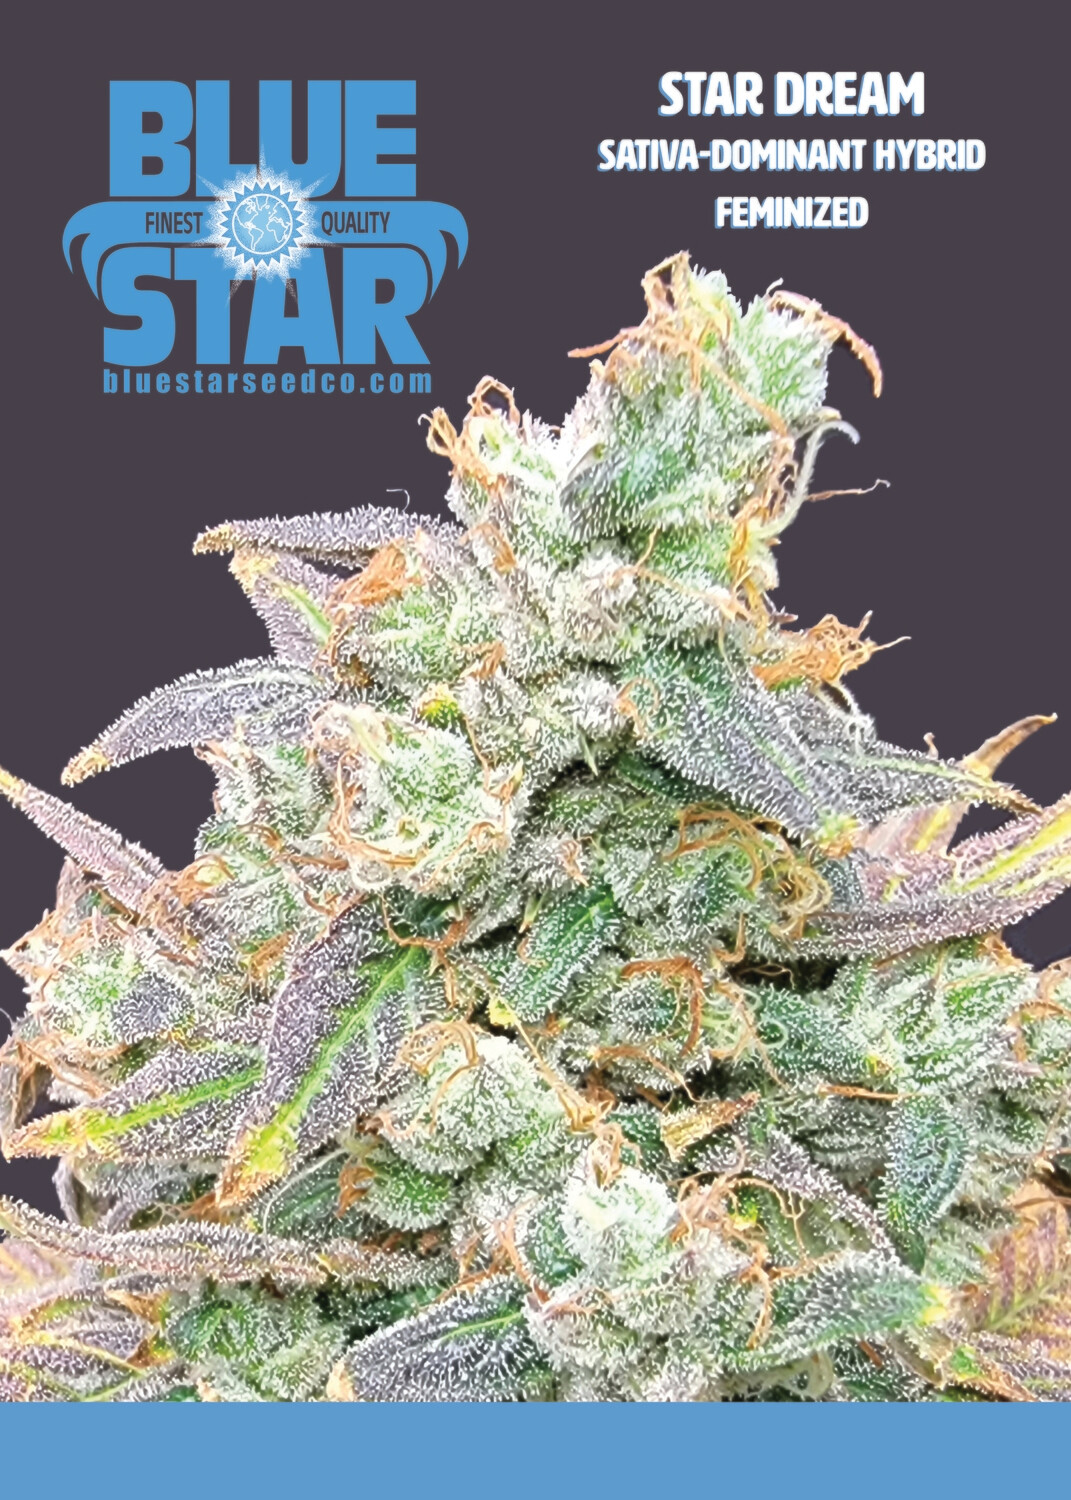 Star Dream - 6 Feminized Seeds - DJ Short/Blue Star Seed Co